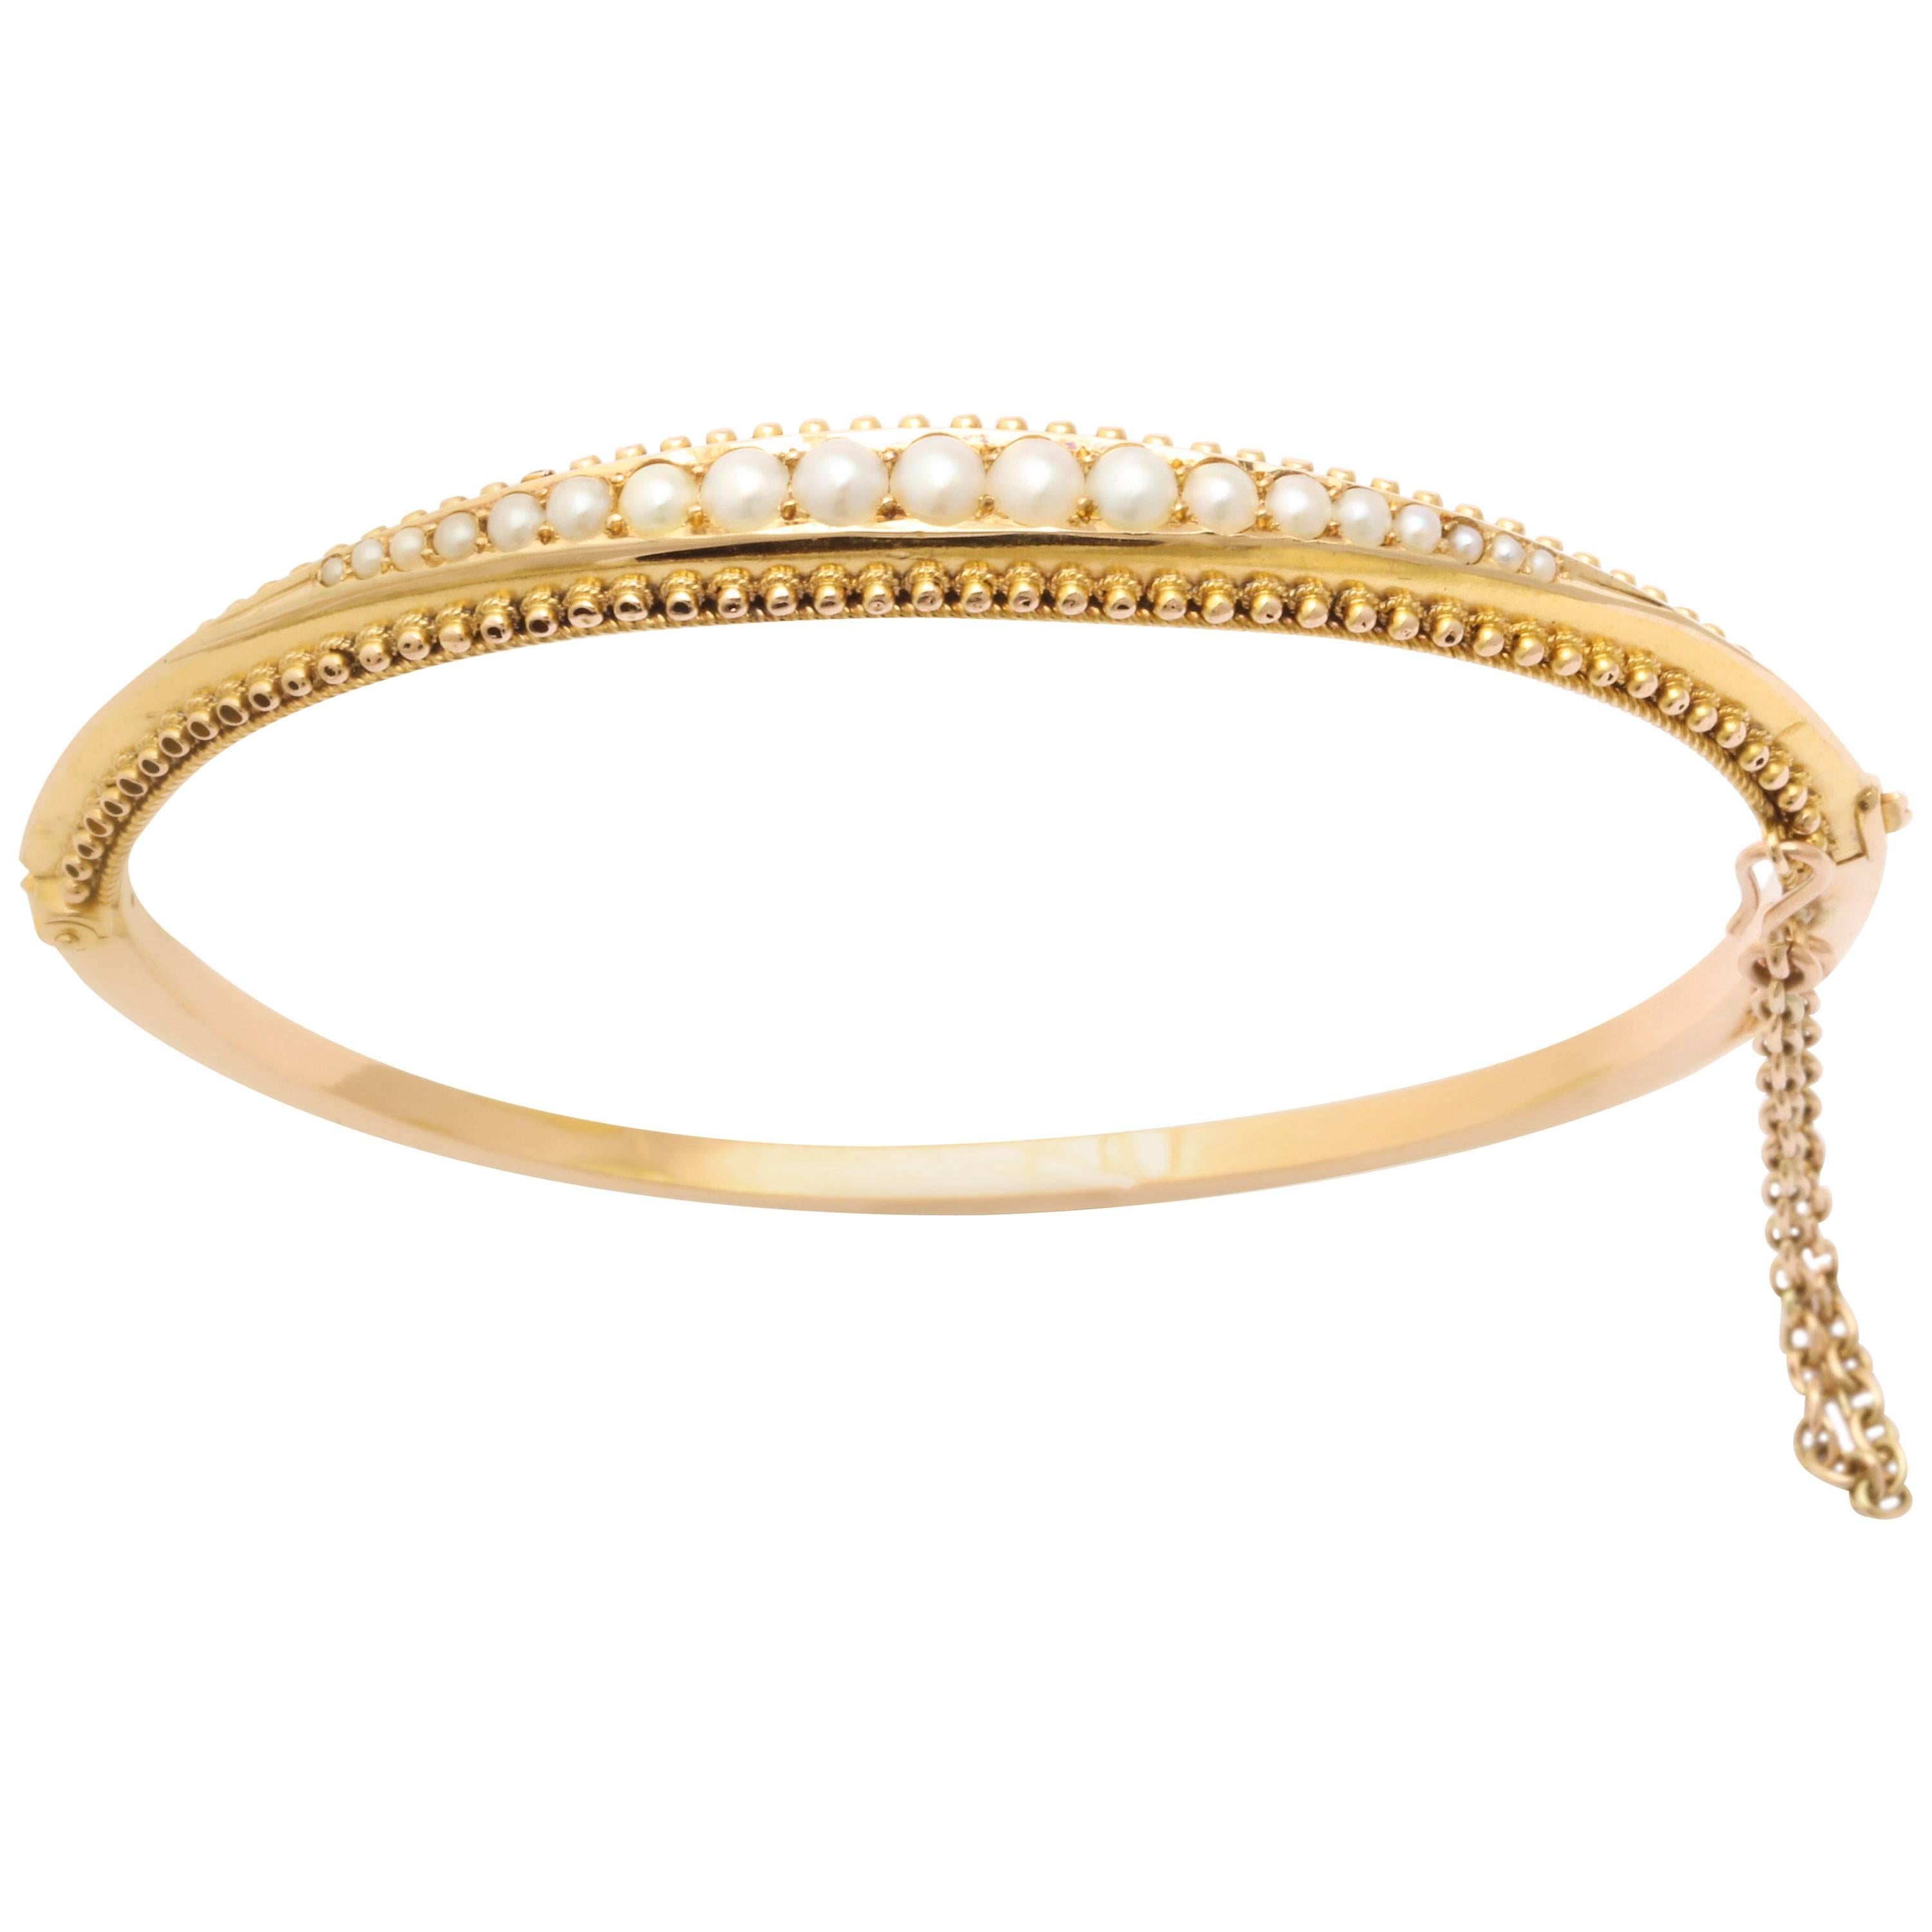 An Edwardian Gold Natural Pearl Bracelet